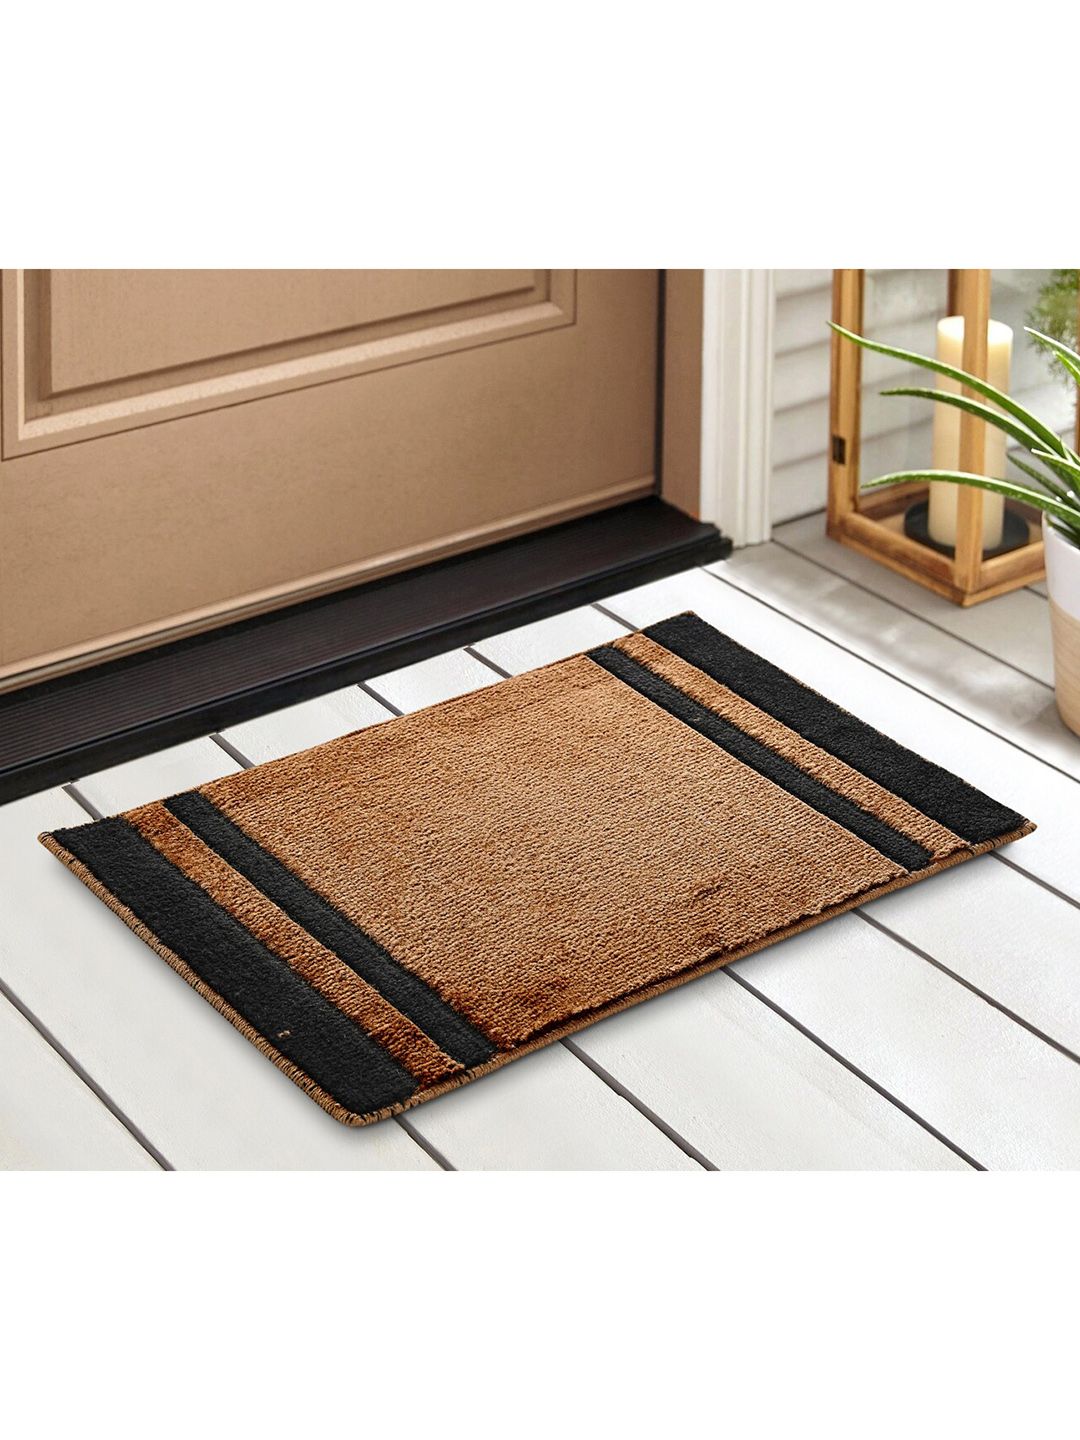 Saral Home Black & Beige Printed Cotton Anti-Skid Doormat Price in India